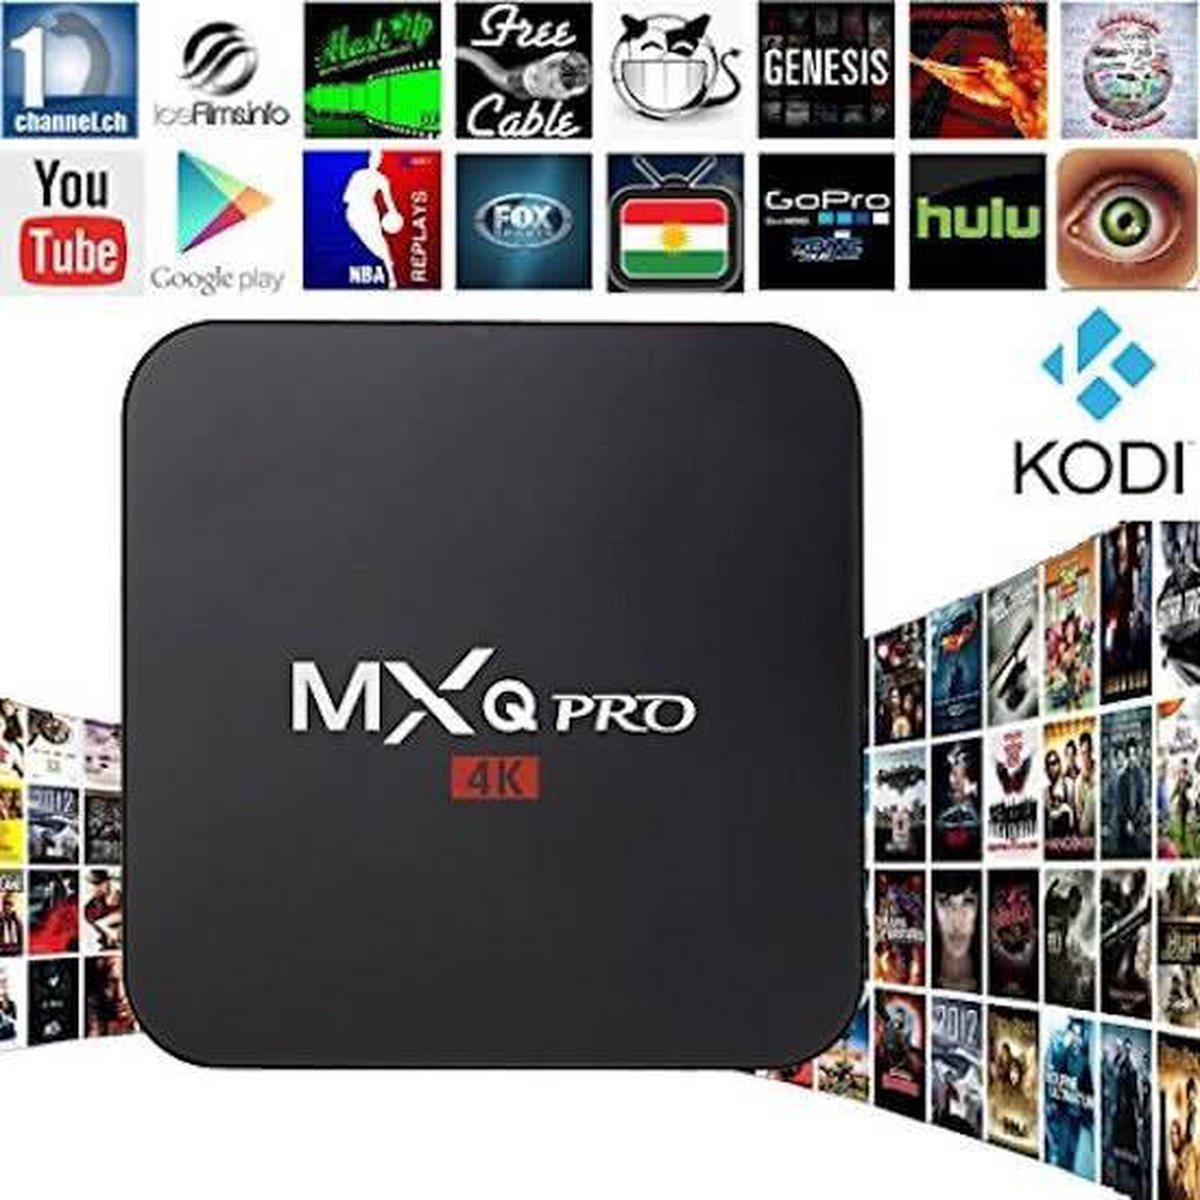 Mxq Pro mediaplayer Android 10 - Kodi 18 en Netflix - 1/8GB - 2022 firmware - MXQ